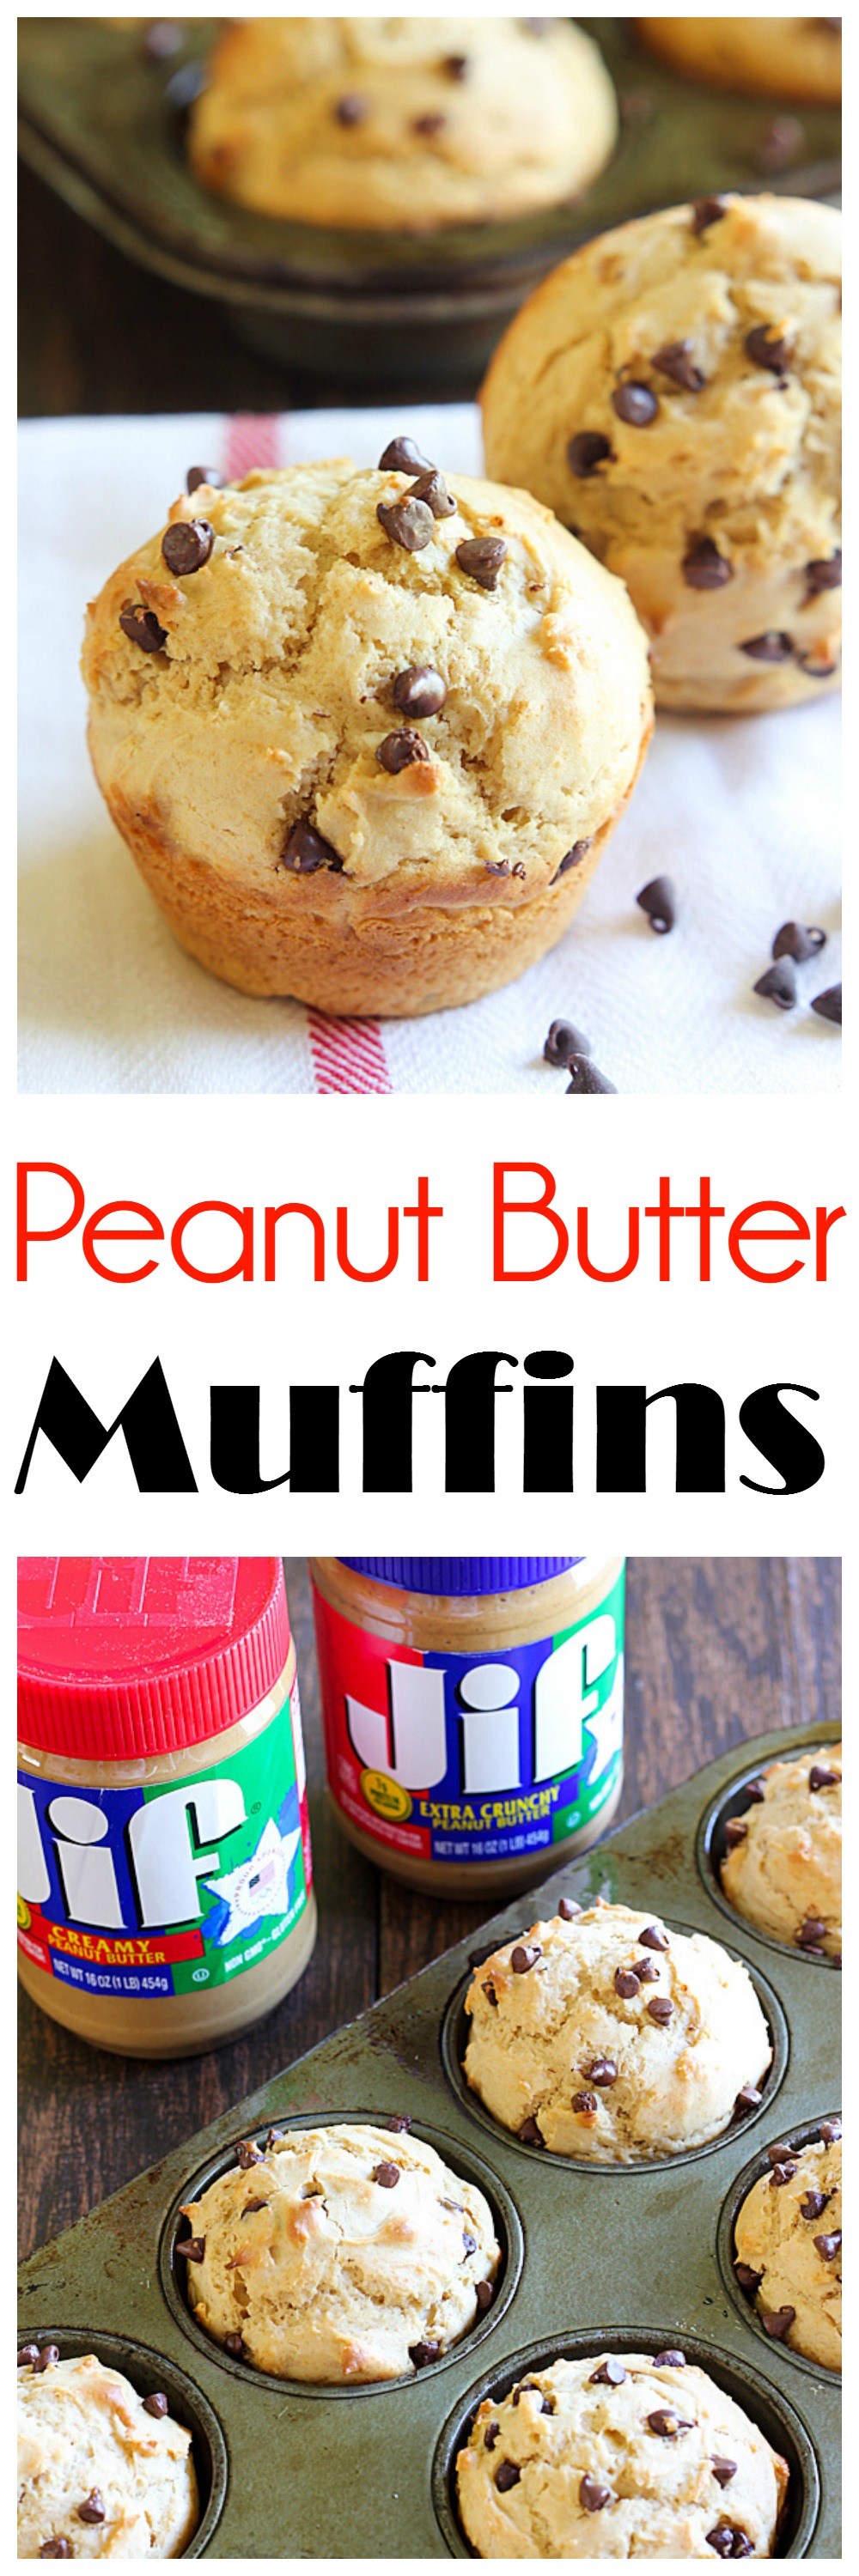 Peanut Butter Muffins